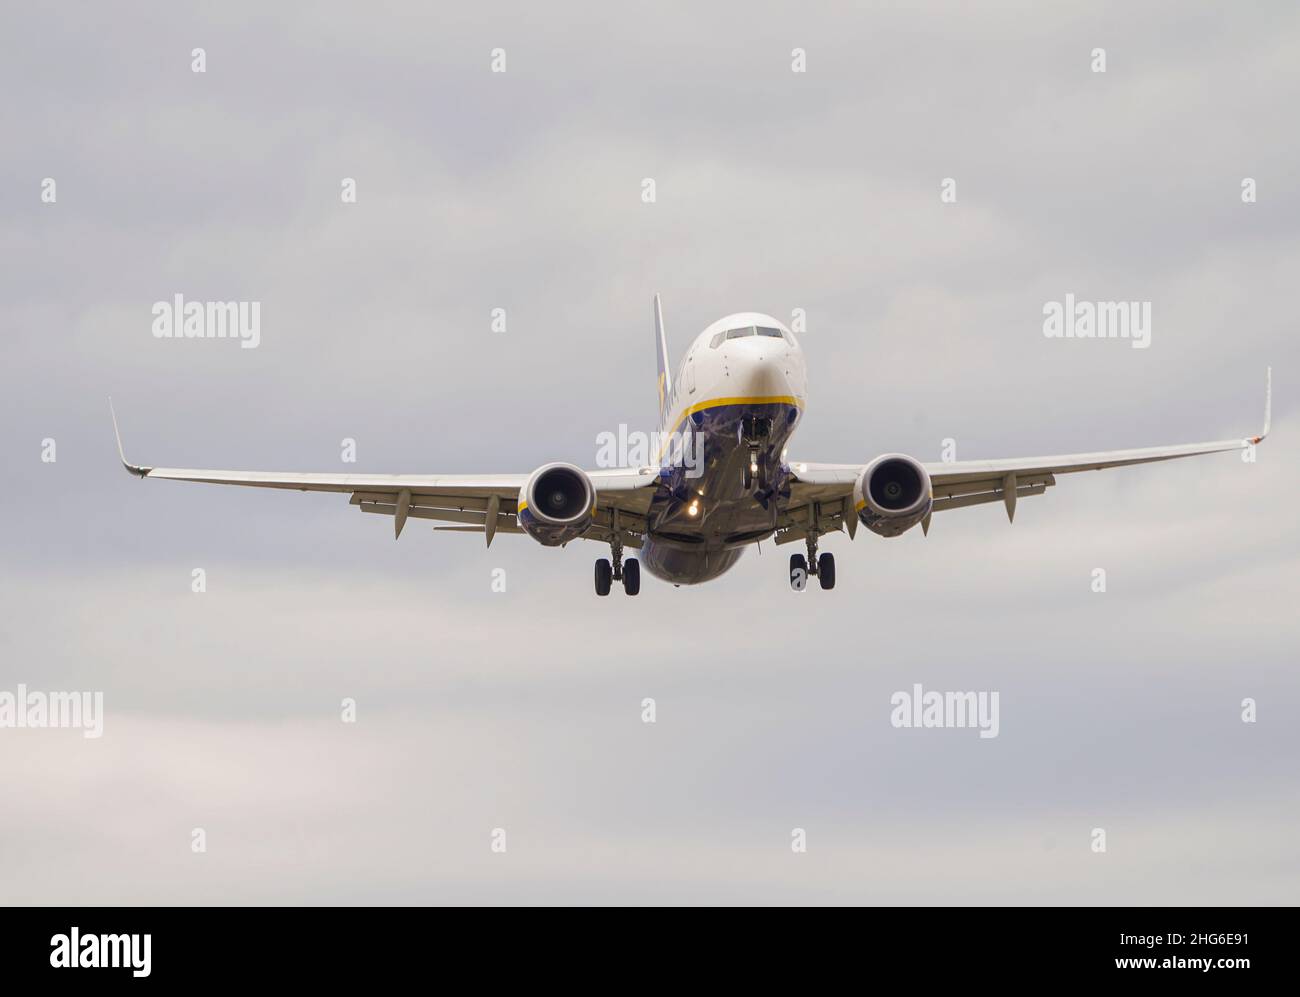 Ryanair aircraft, landing approaching at Airport. Stock Photo